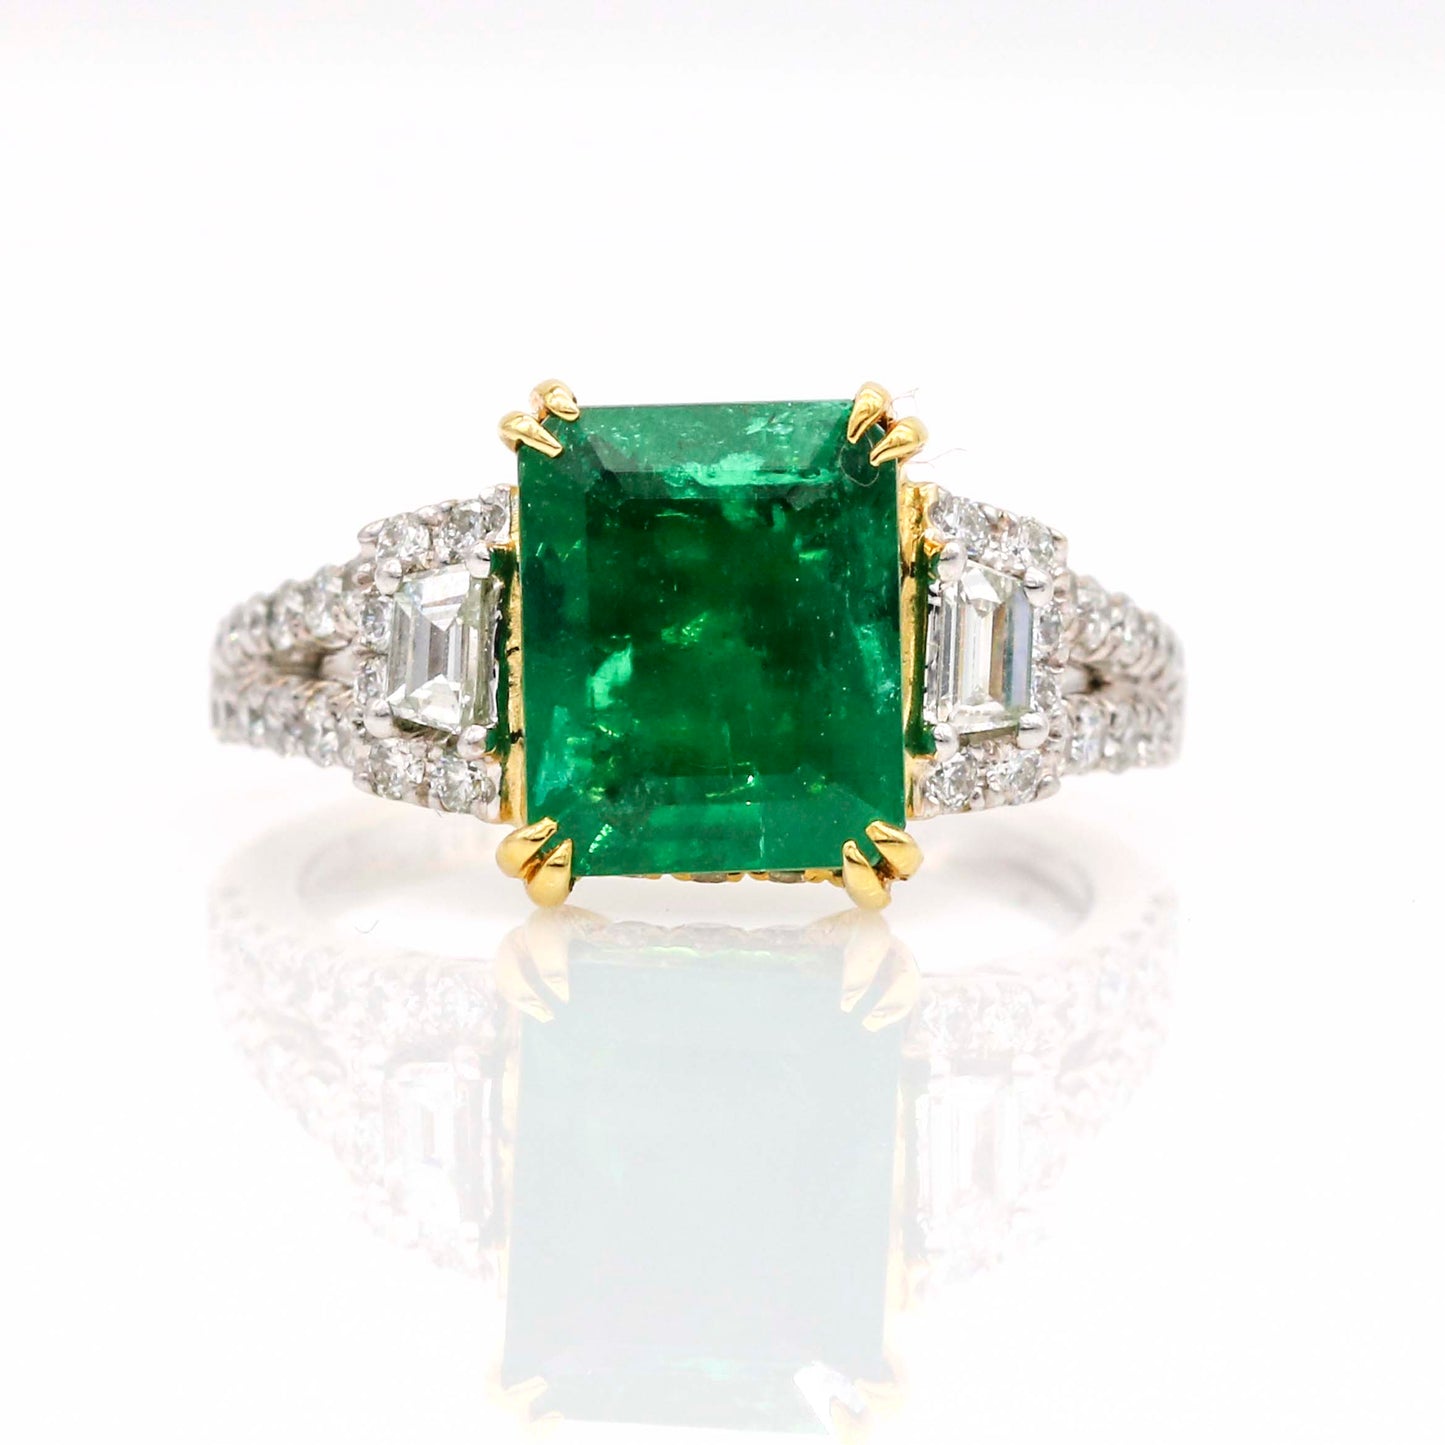 Anillo de esmeralda natural de color verde intenso con detalles de diamantes firmado Ed B